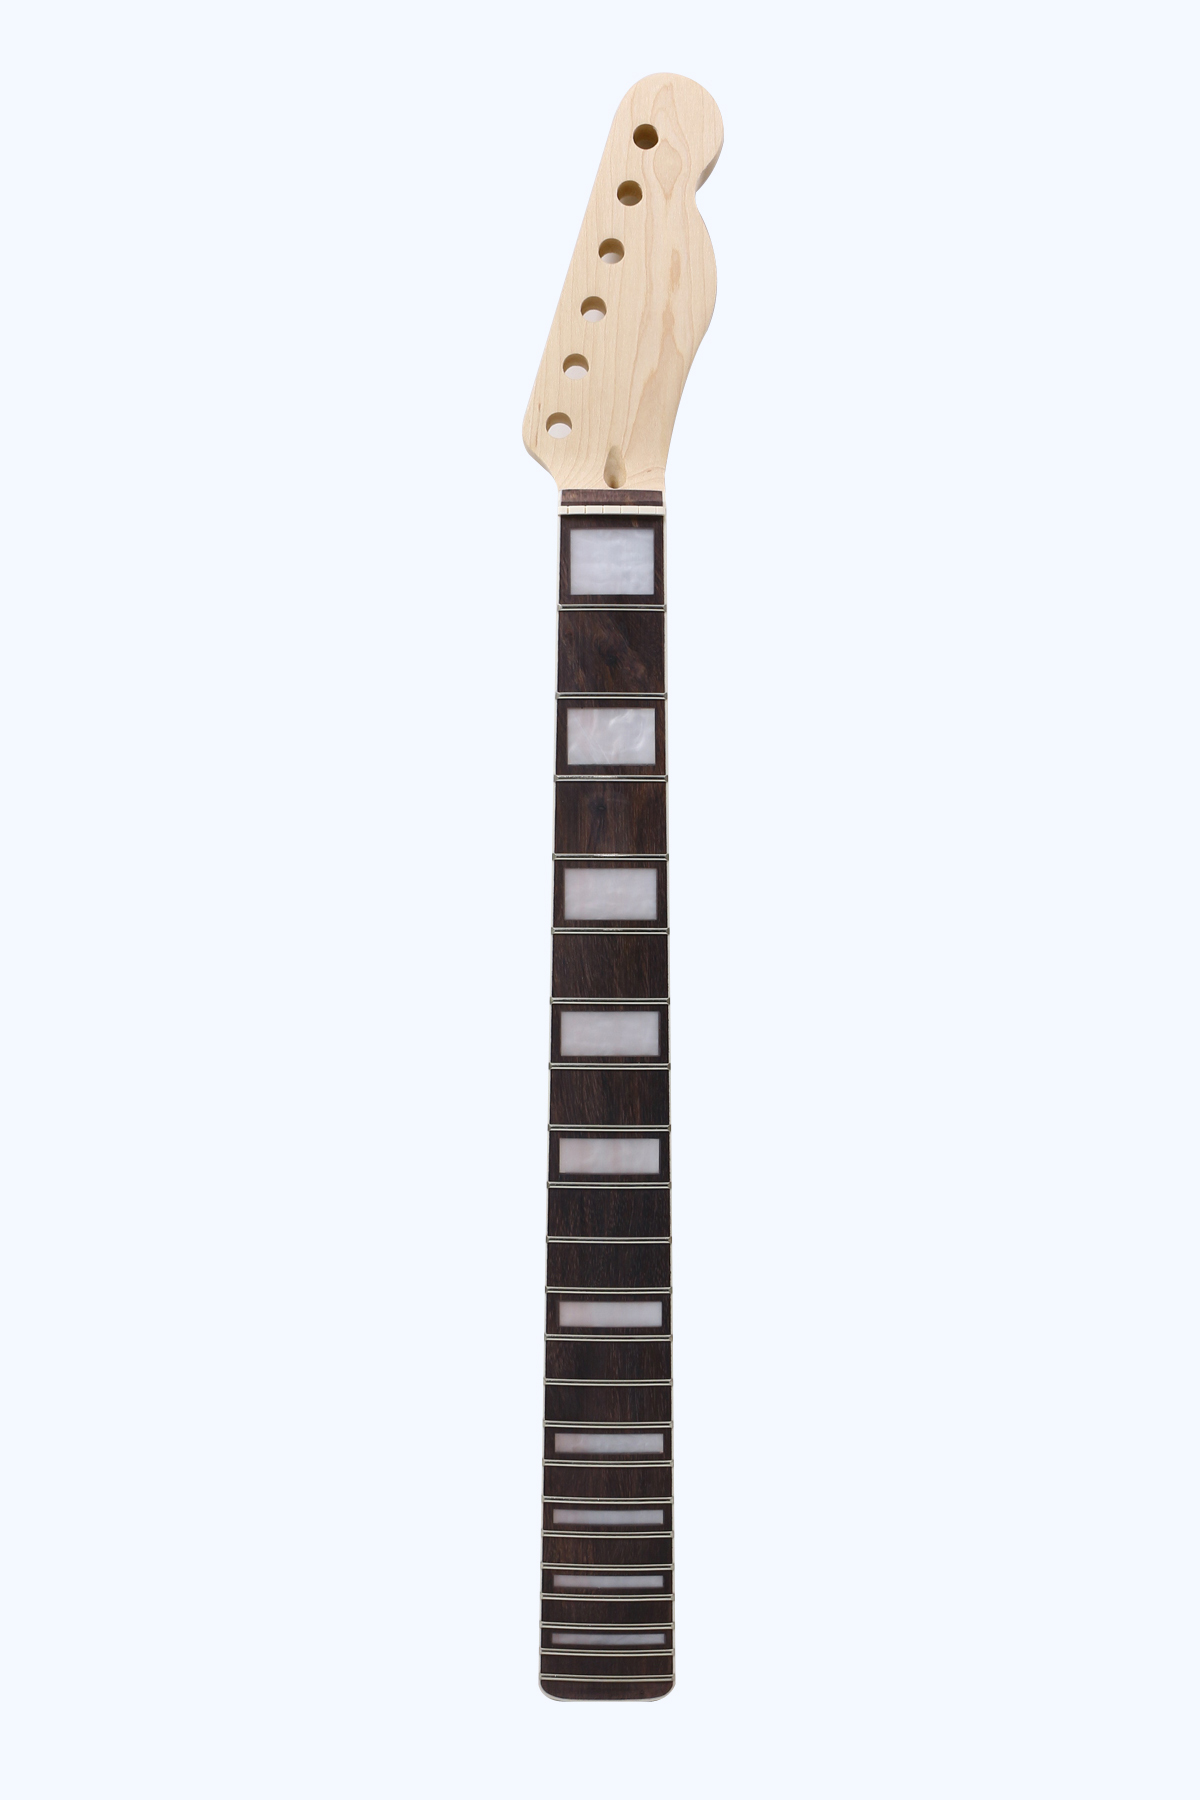 Yinfente Electric guitar neck 22fret 24.75inch mahogany wood rosewood guitar fretboard vine inlay firebird bolt on DIY guitar 